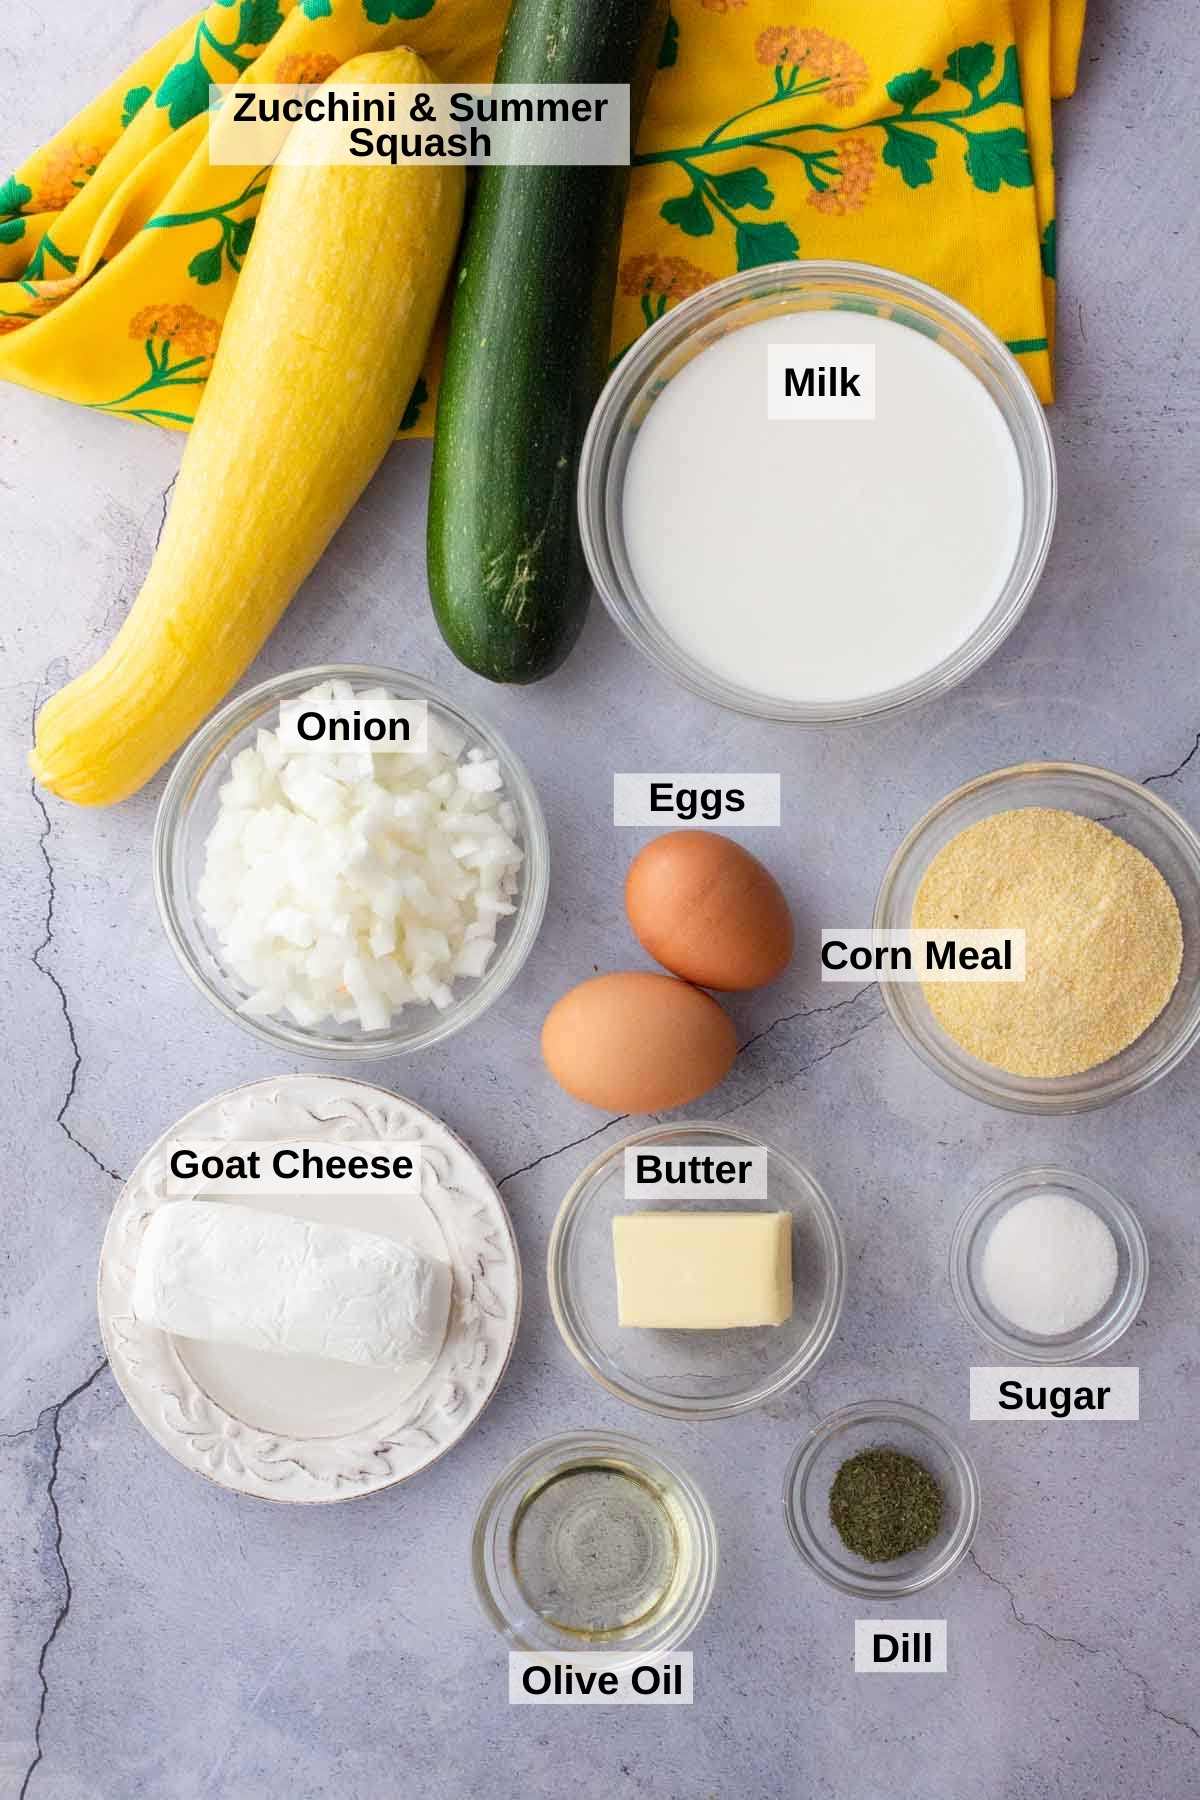 Ingredients to make zucchini squash casserole.